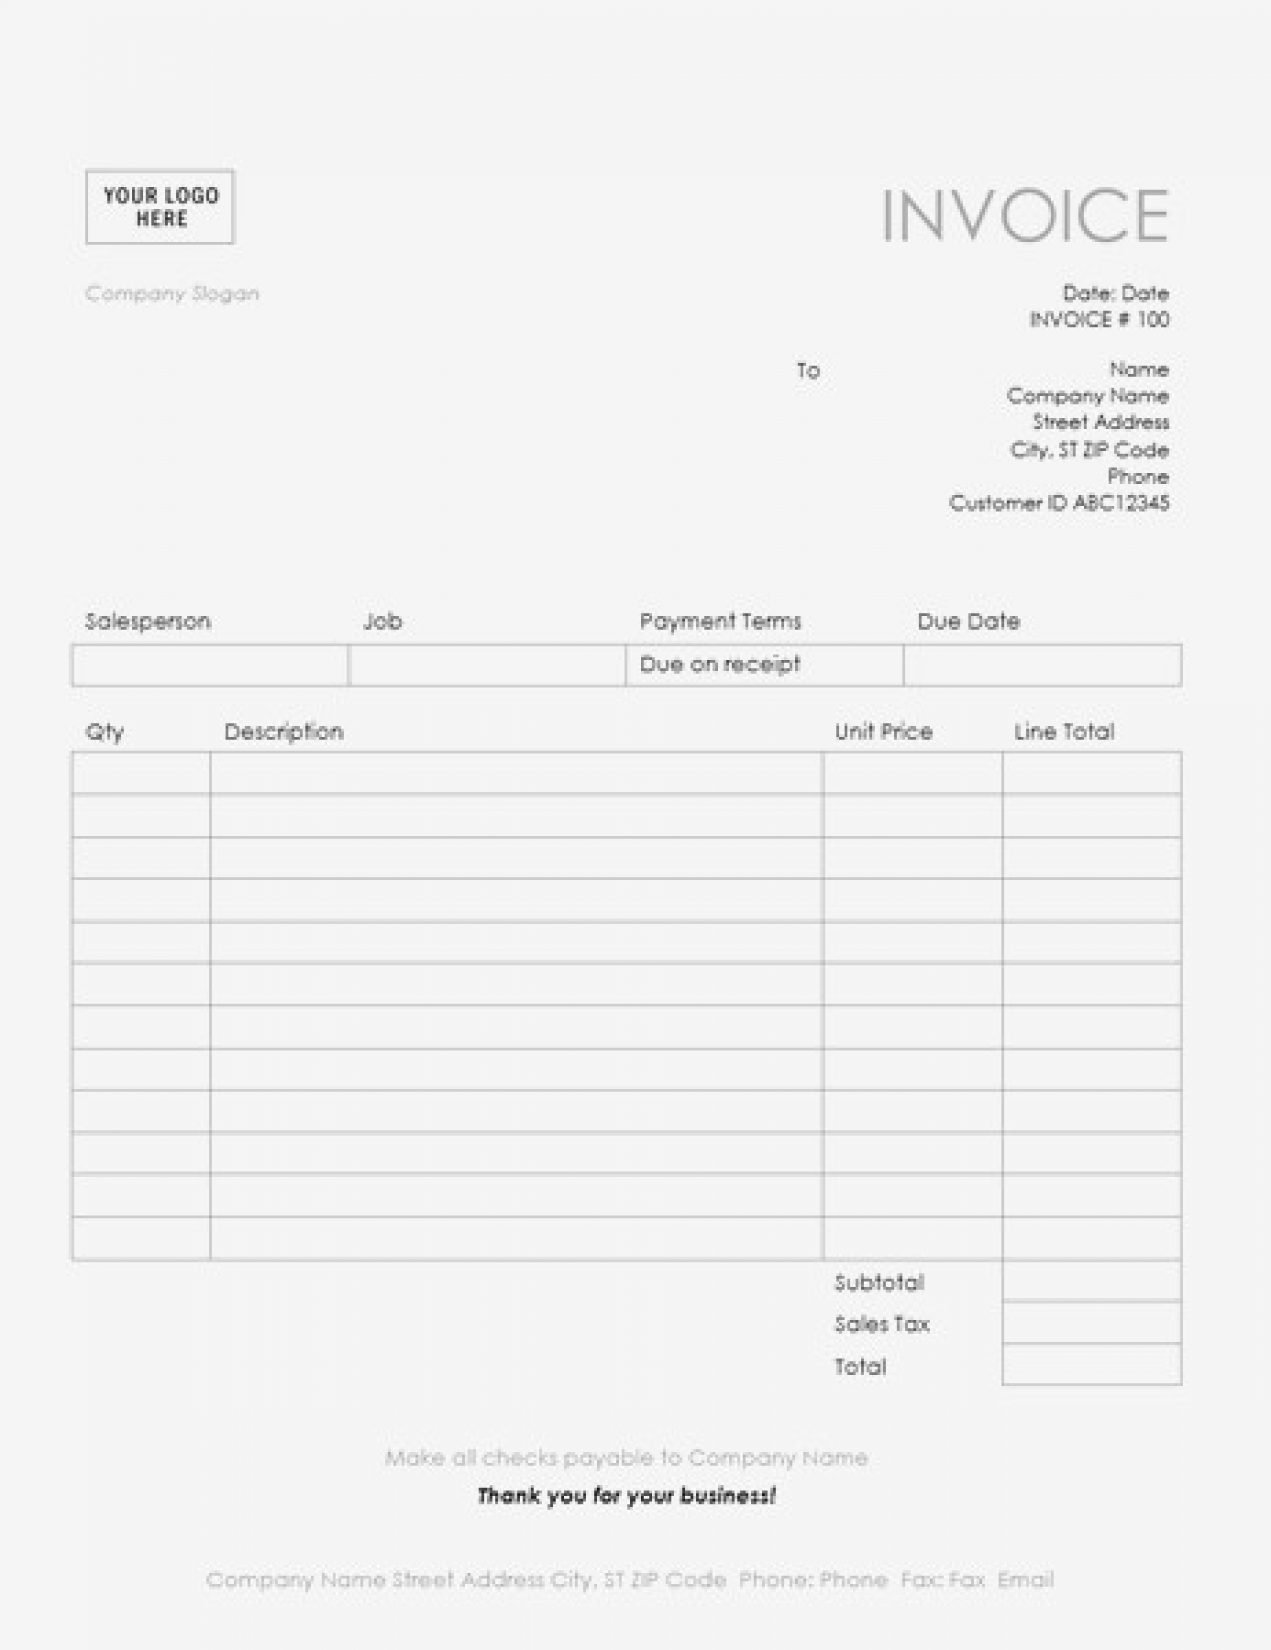 blank invoice templates microsoft word